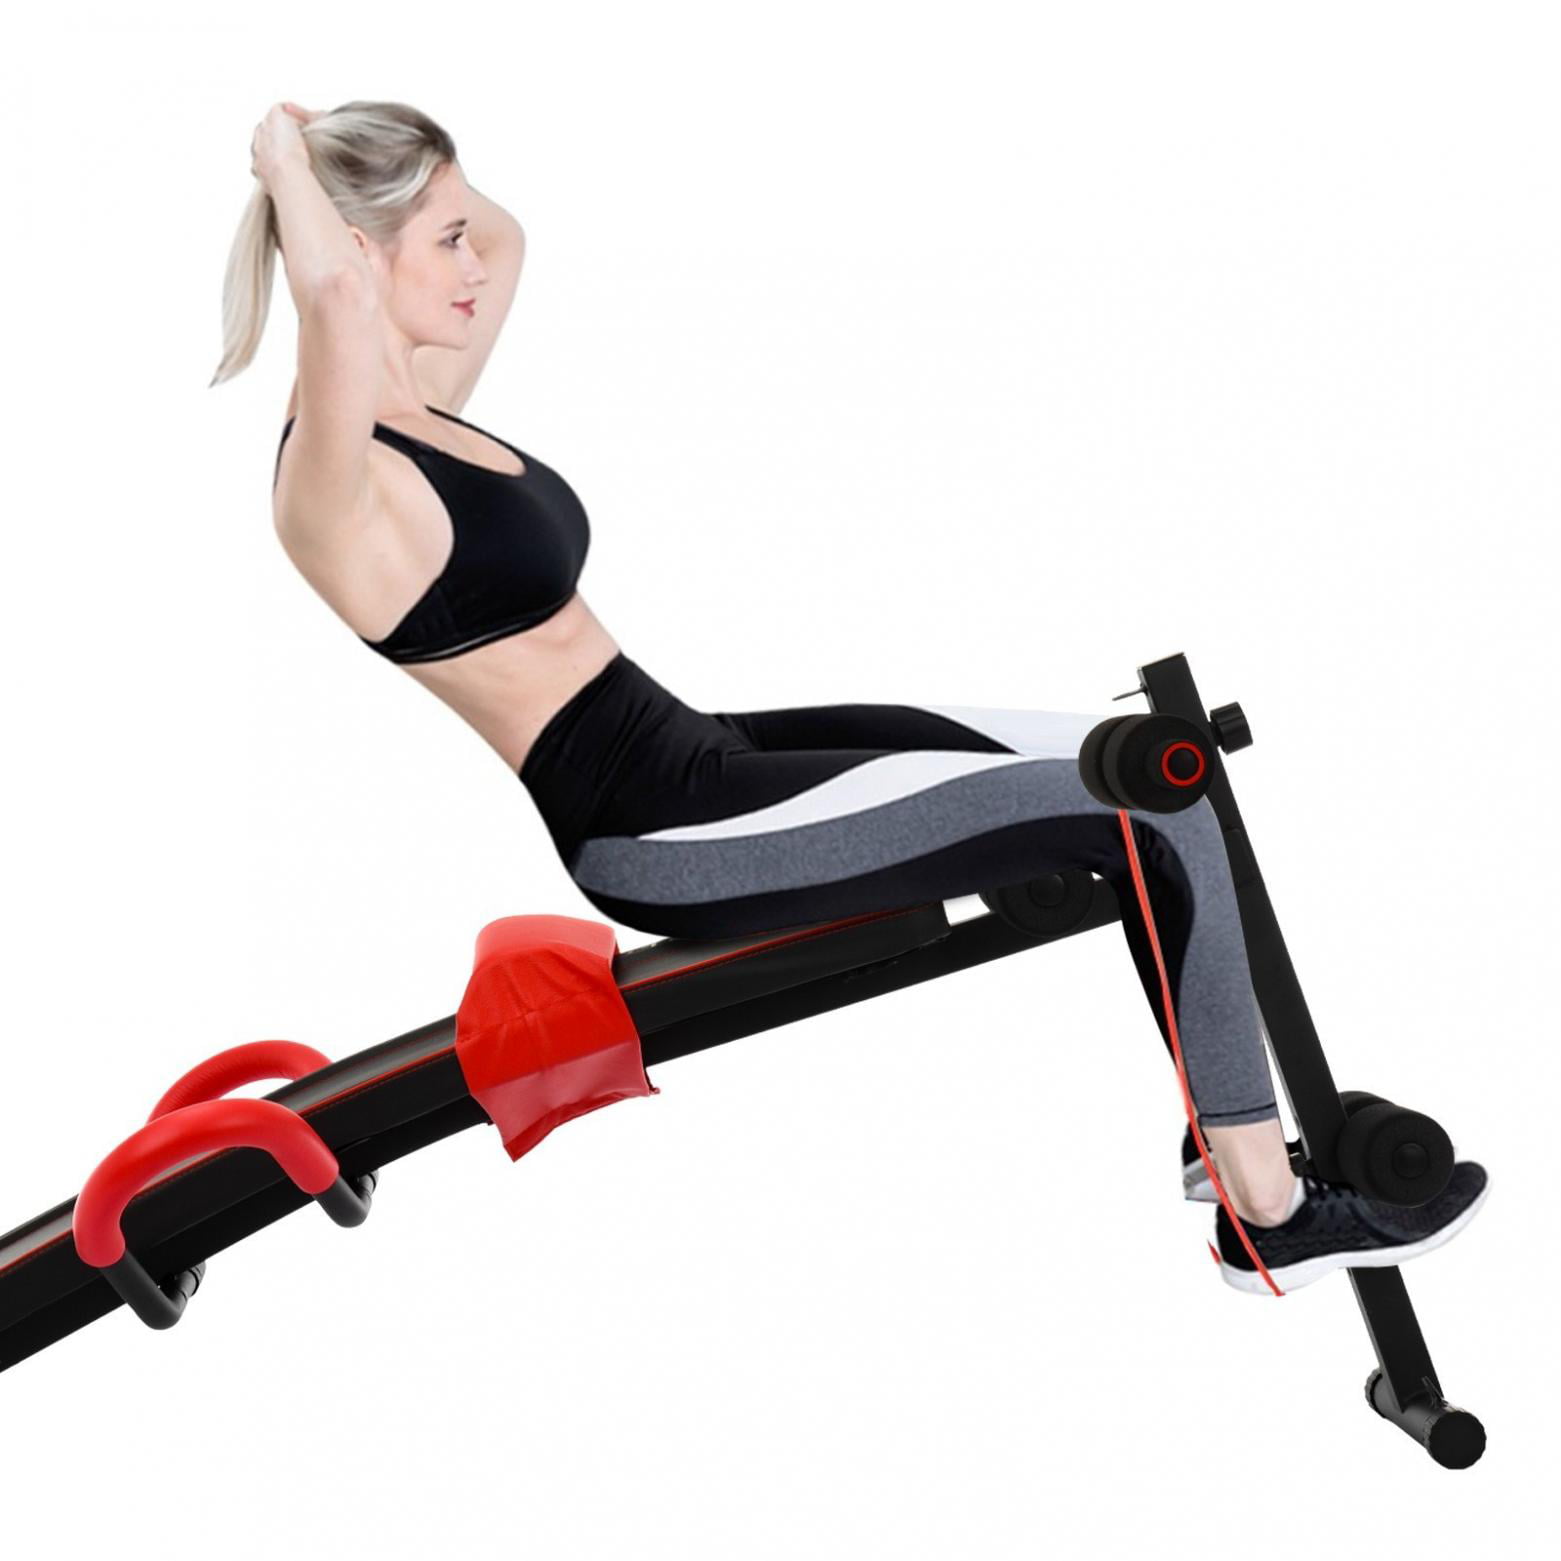 Details about   Folding Adjustable Ab Sit Up Bench Decline Home Gym Crunch Fitness Board US 